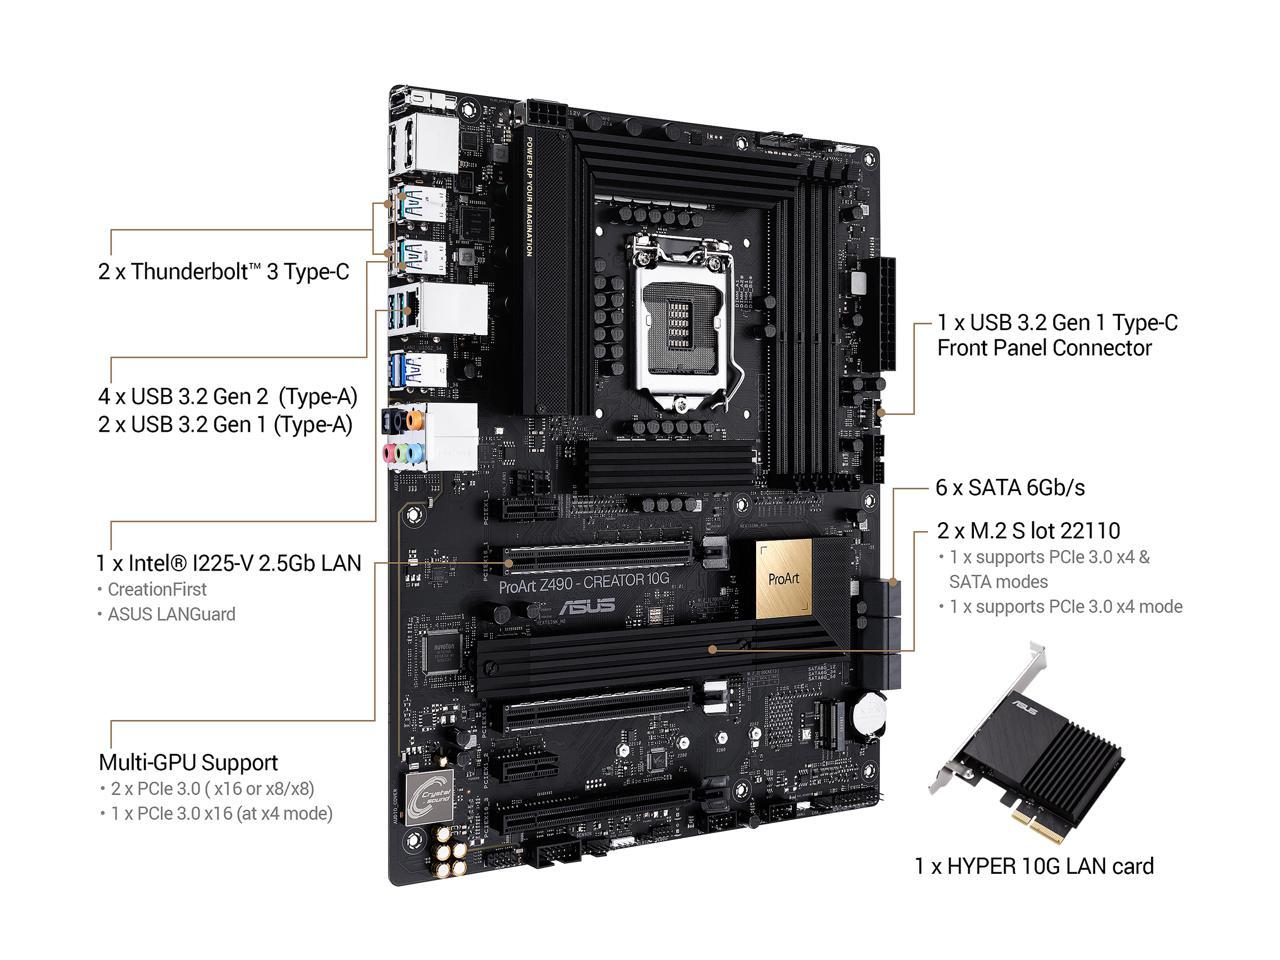 Asus Proart Z490-Creator 10G Lga 1200 Intel Z490 Sata 6Gb/S Atx Intel Motherboard (12+2 Power